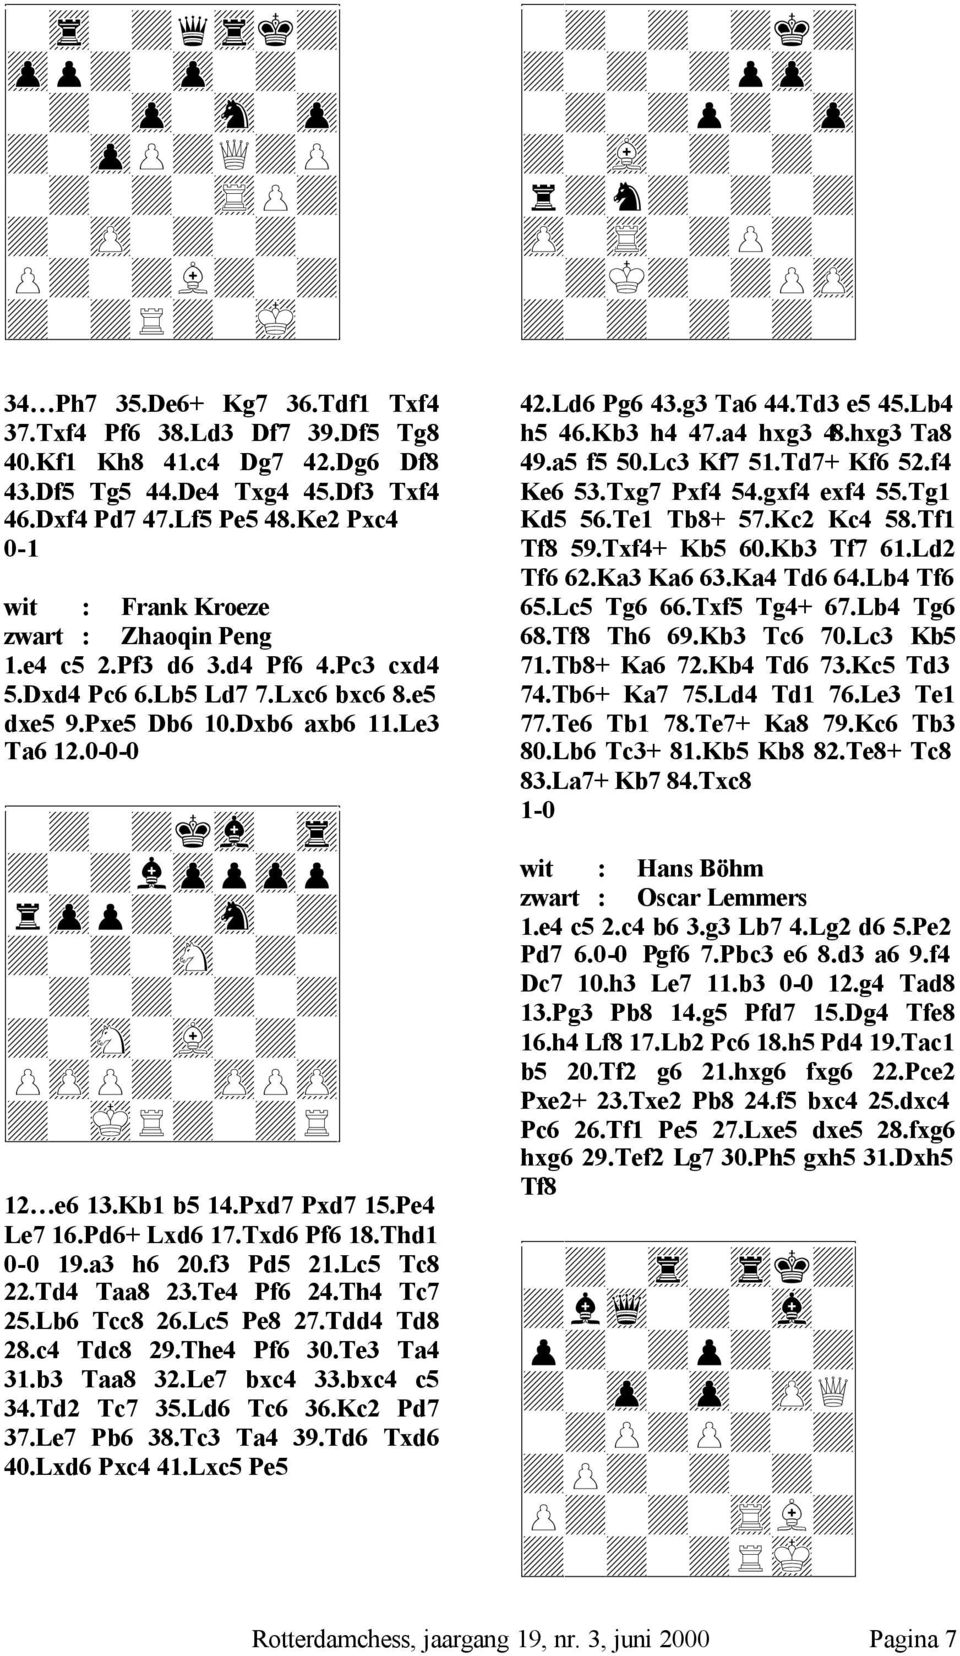 Dxb6 axb6 11.Le3 Ta6 12.0-0-0 xaaaageacx xaaaebbbbx xcbbaadaax xaaaajaaax xaaaaaaaax xaajakaaax xhhhaahhhx xaamiaaaix 12 e6 13.Kb1 b5 14.Pxd7 Pxd7 15.Pe4 Le7 16.Pd6+ Lxd6 17.Txd6 Pf6 18.Thd1 0-0 19.